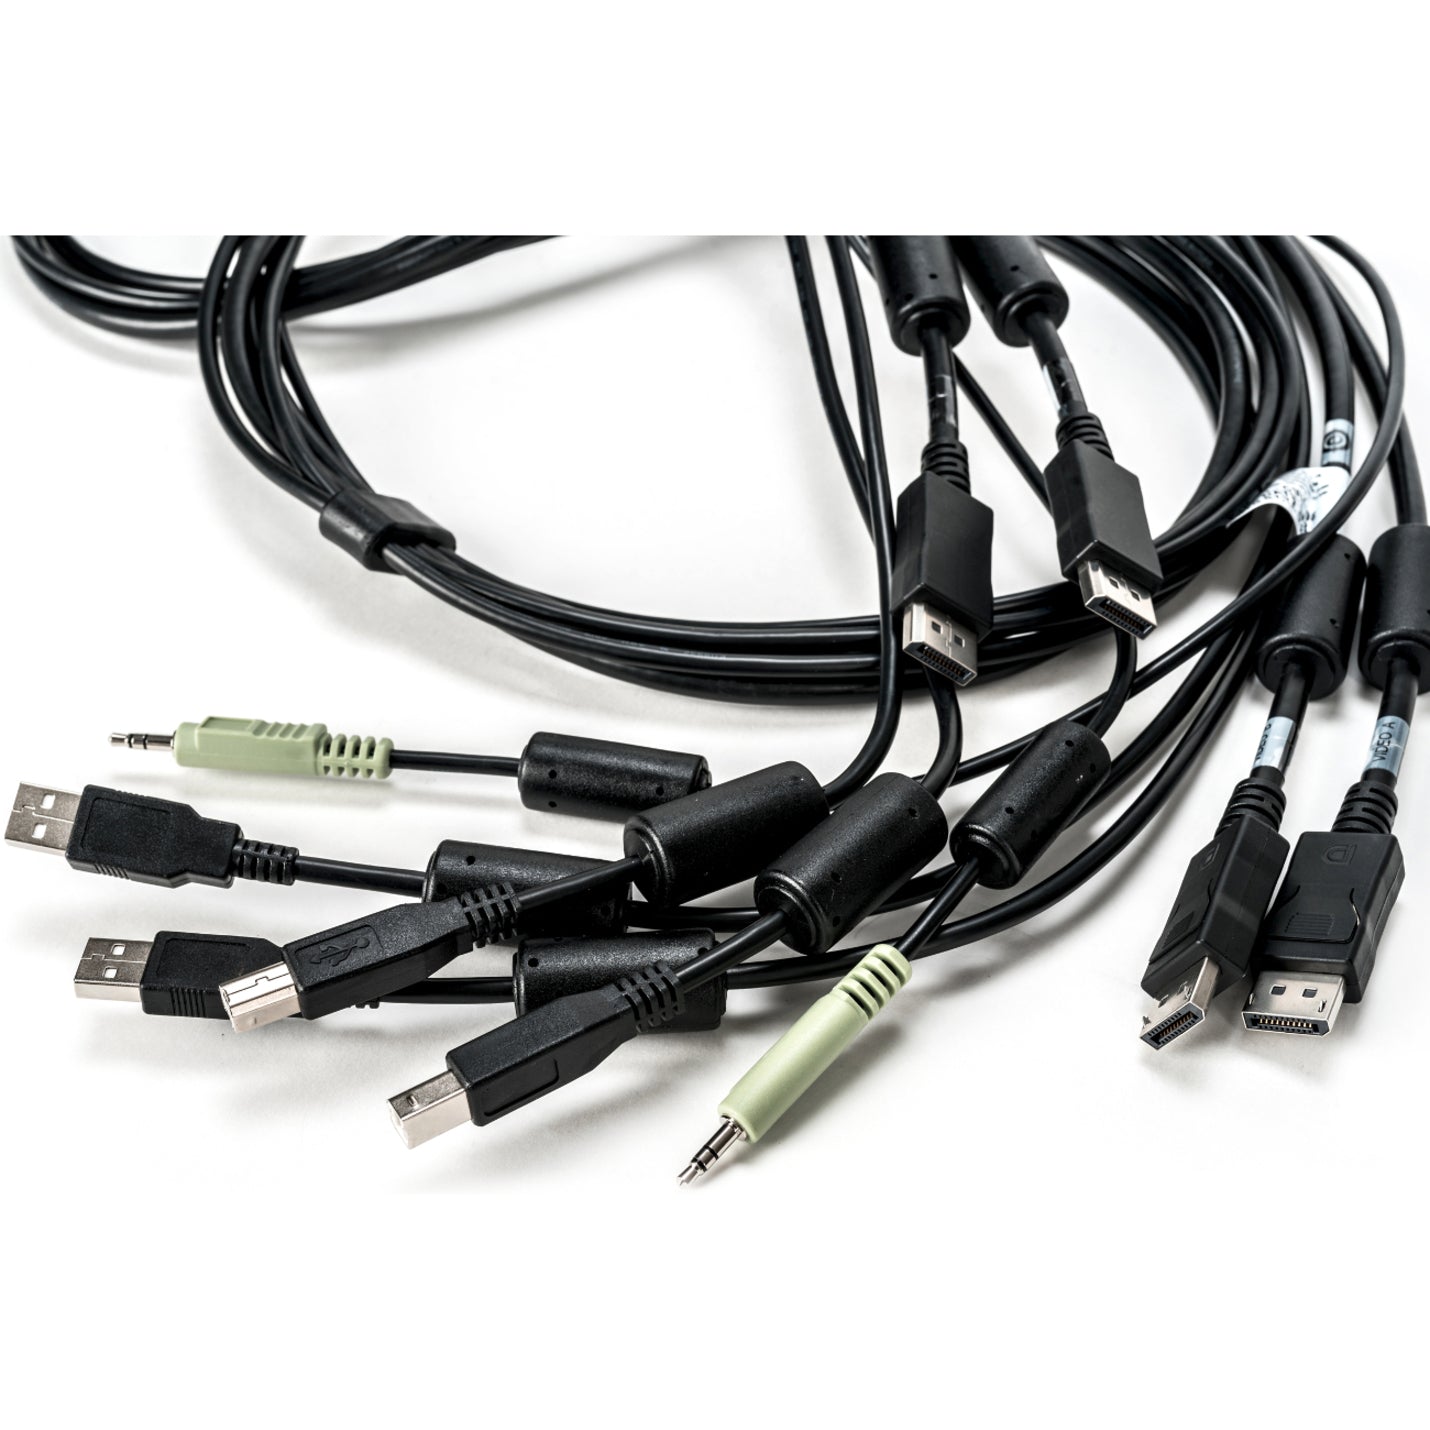 AVOCENT CBL0108 SC945D Kabel - 6ft Dual USB Tastatur und Maus Dual DisplayPort und Audio Kabel